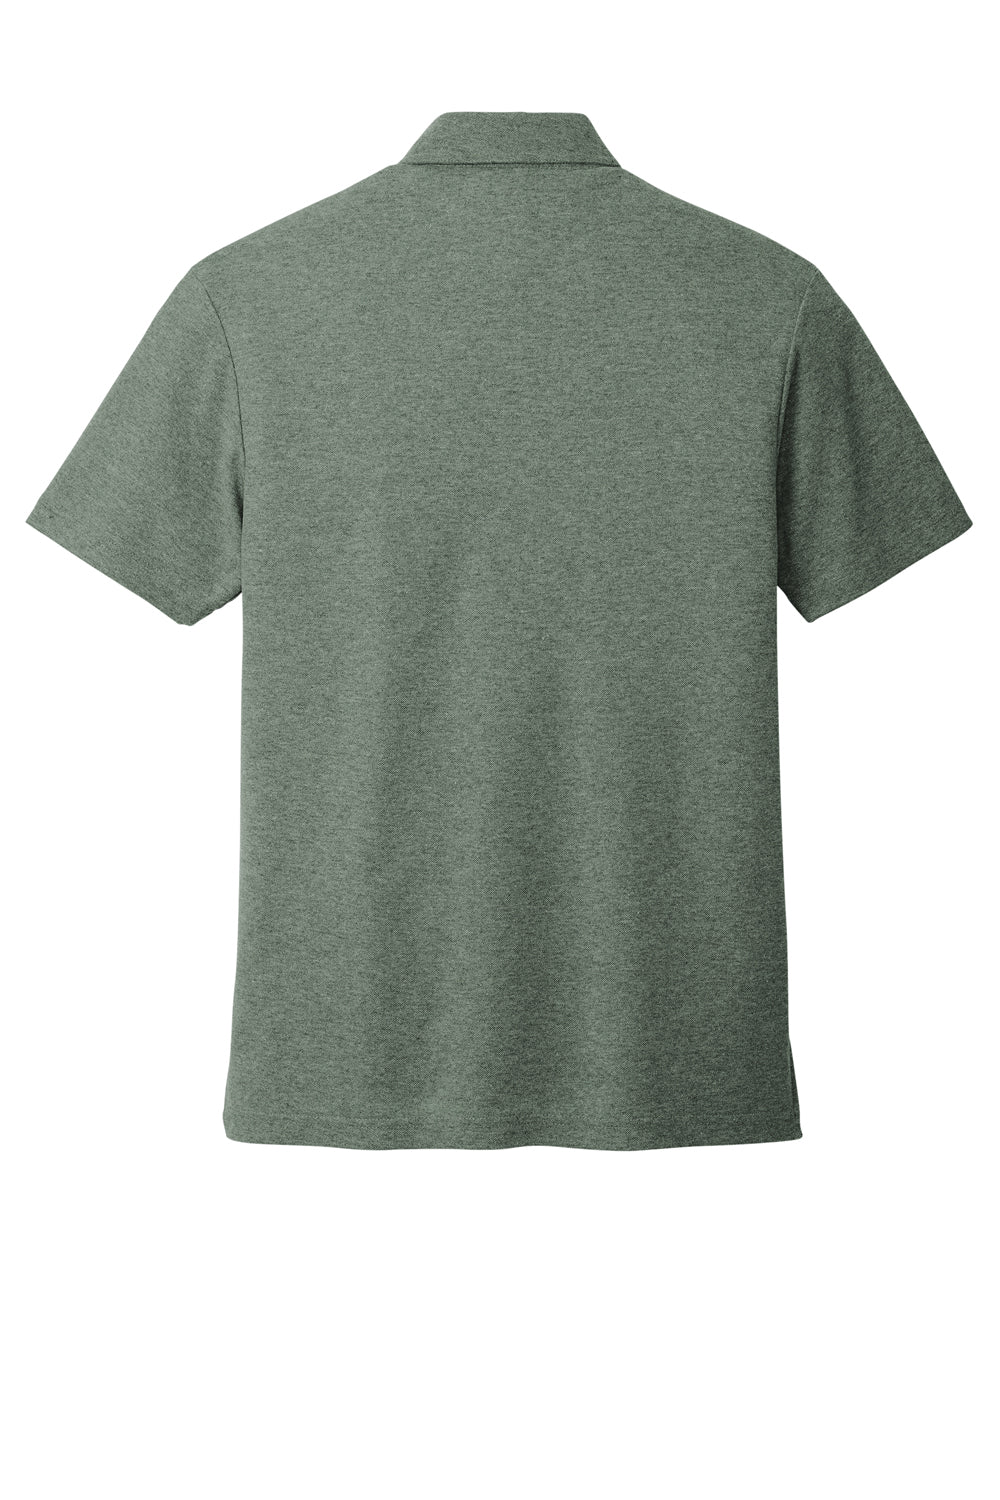 Port Authority K868 Mens C-FREE Pique Short Sleeve Polo Shirt w/ Pocket Heather Dark Green Flat Back